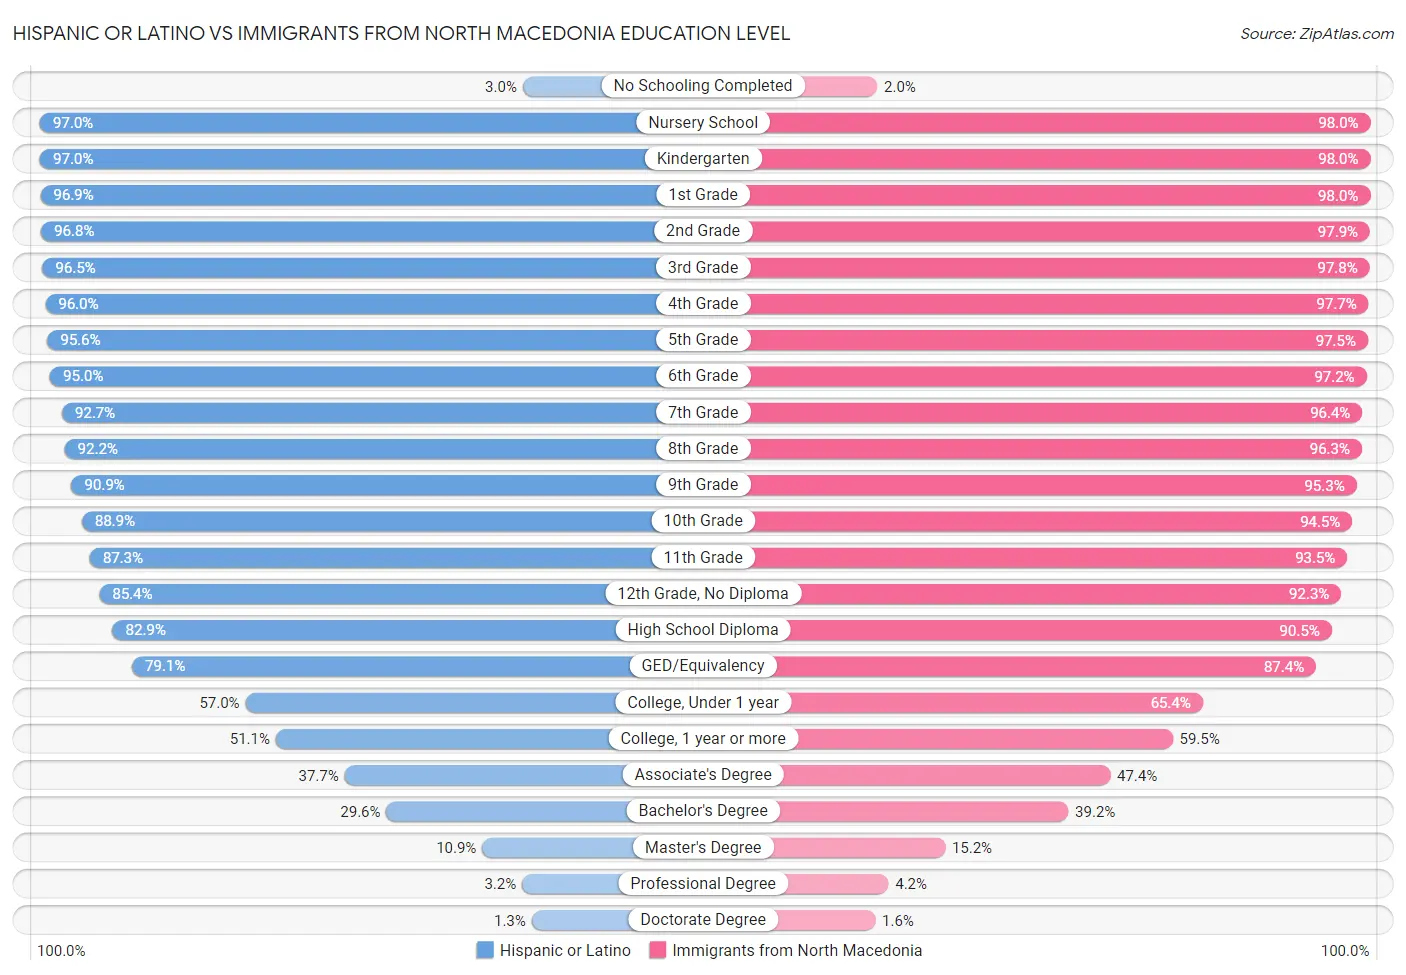 Hispanic or Latino vs Immigrants from North Macedonia Education Level